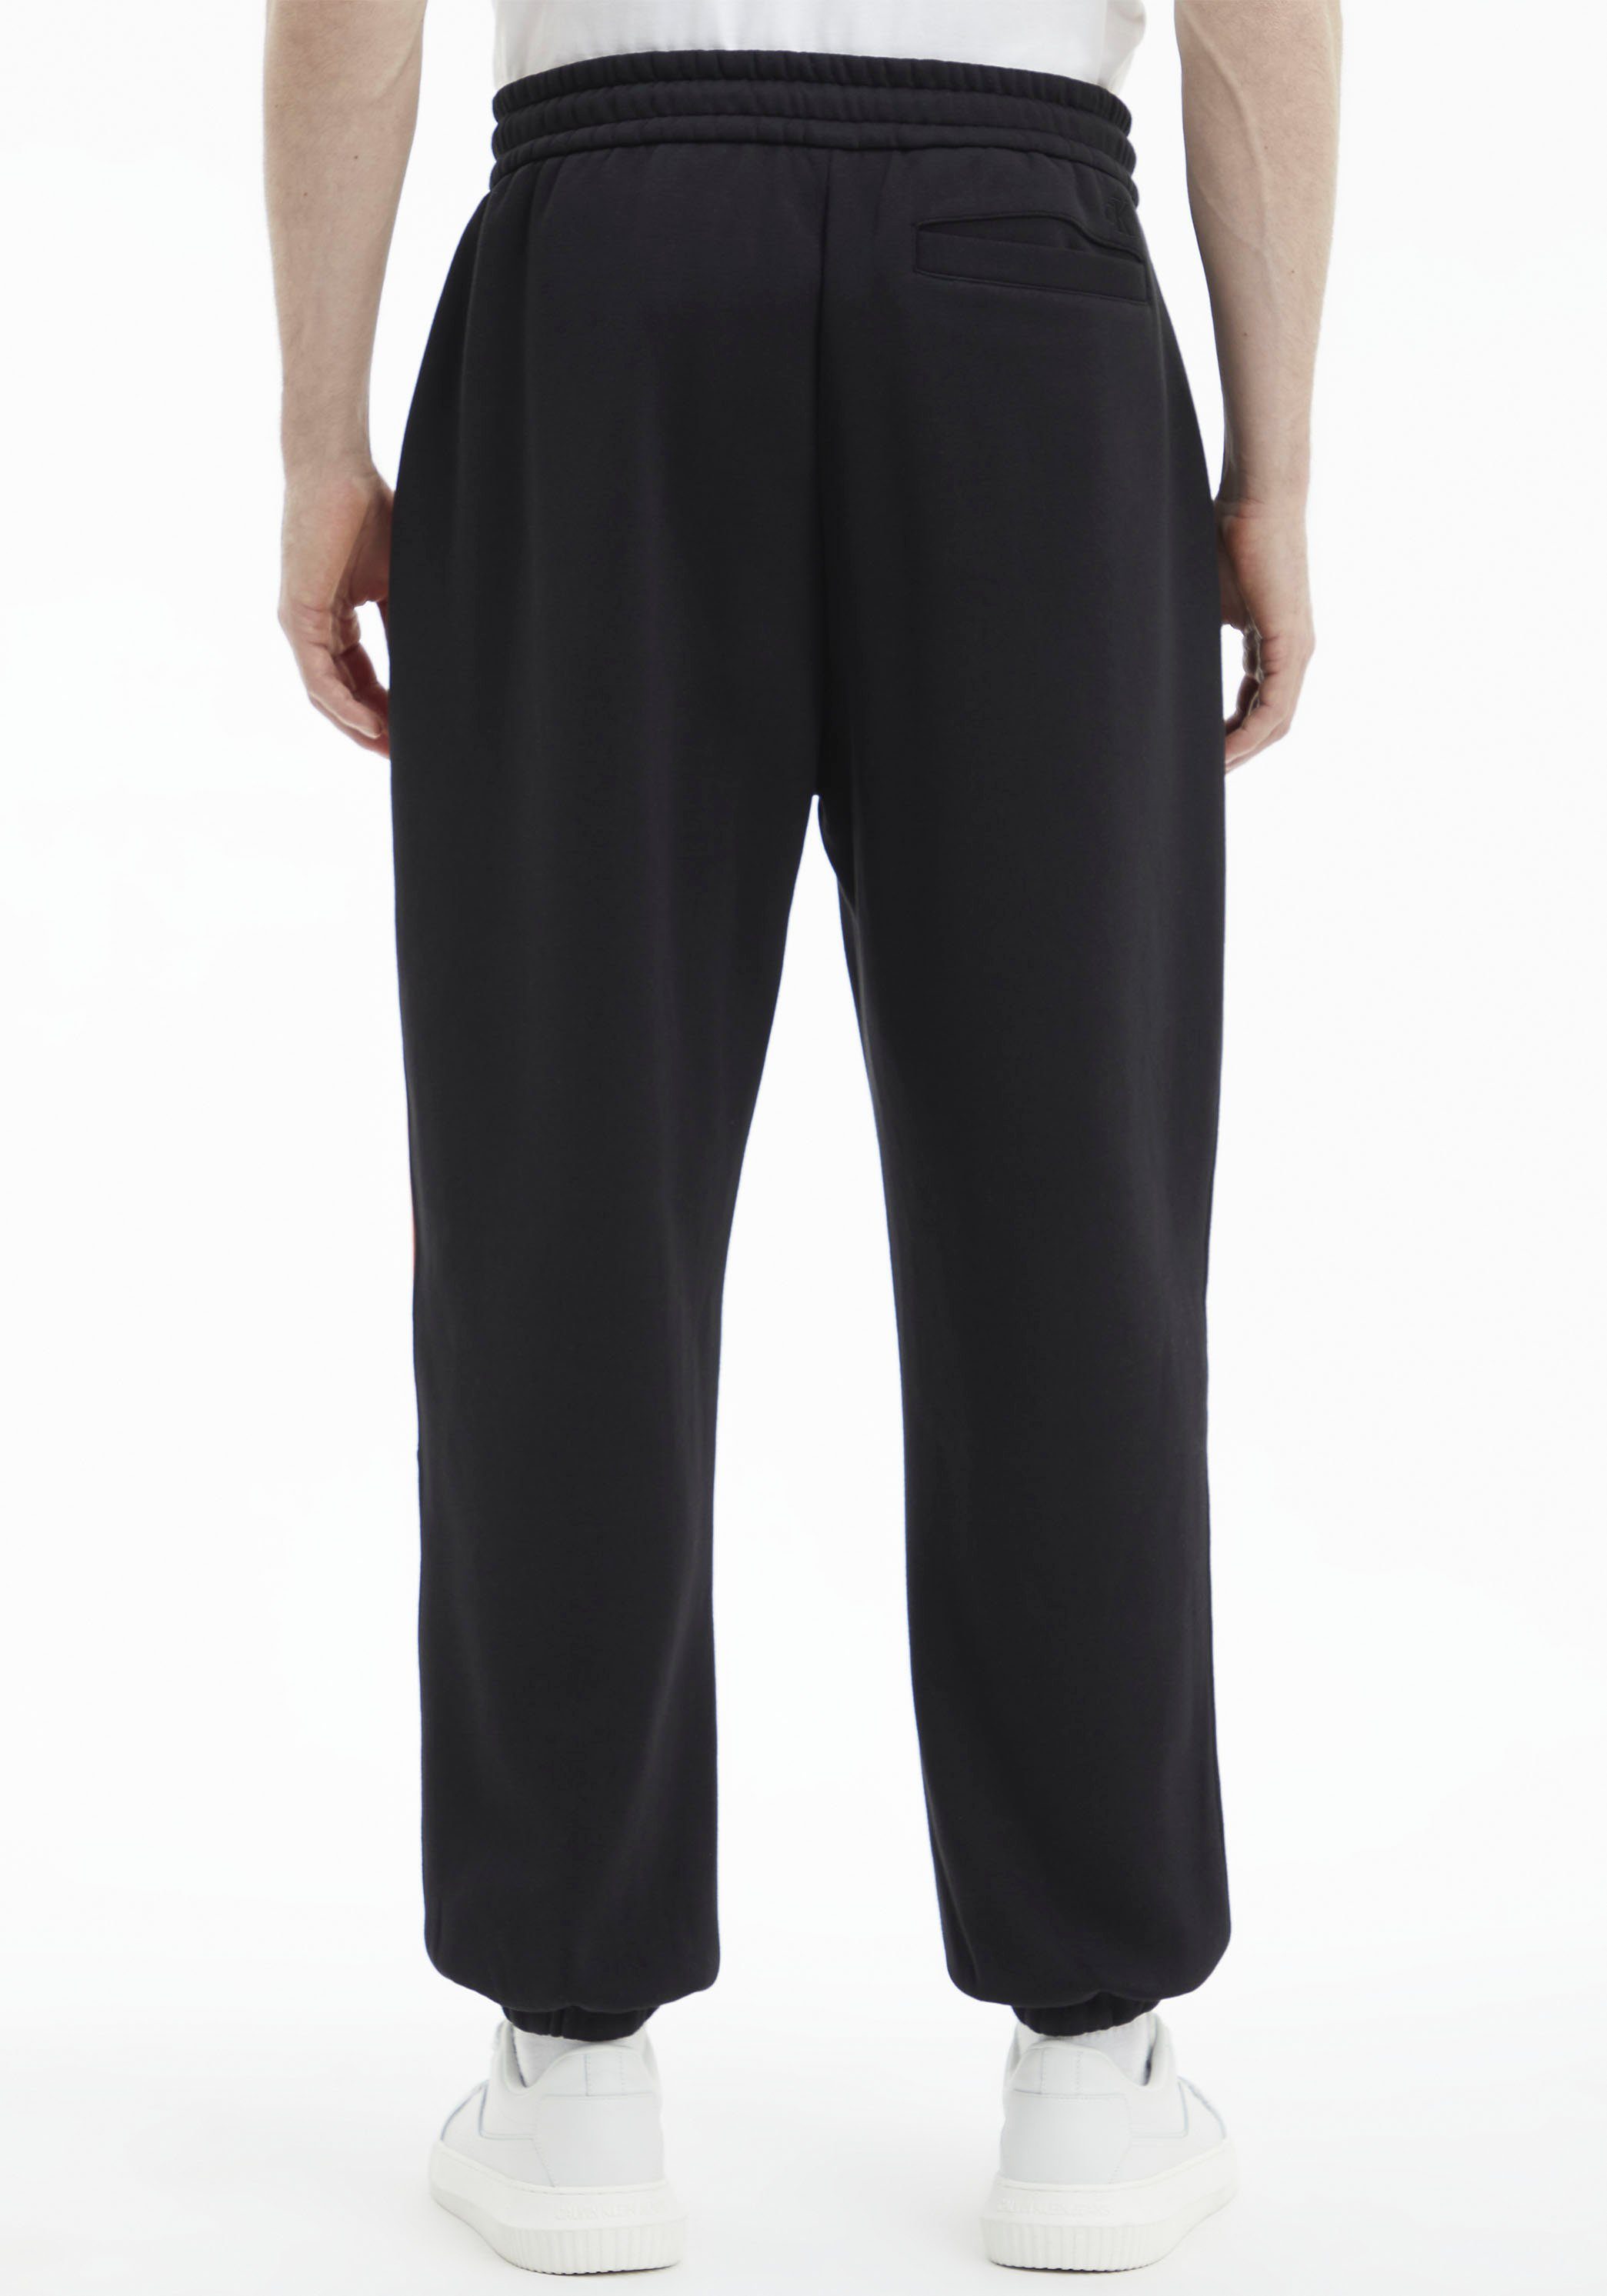 Calvin Klein Jeans Coral COLORBLOCK / Orange STACKED Ck HWK Sweathose (Packung) Black PANT